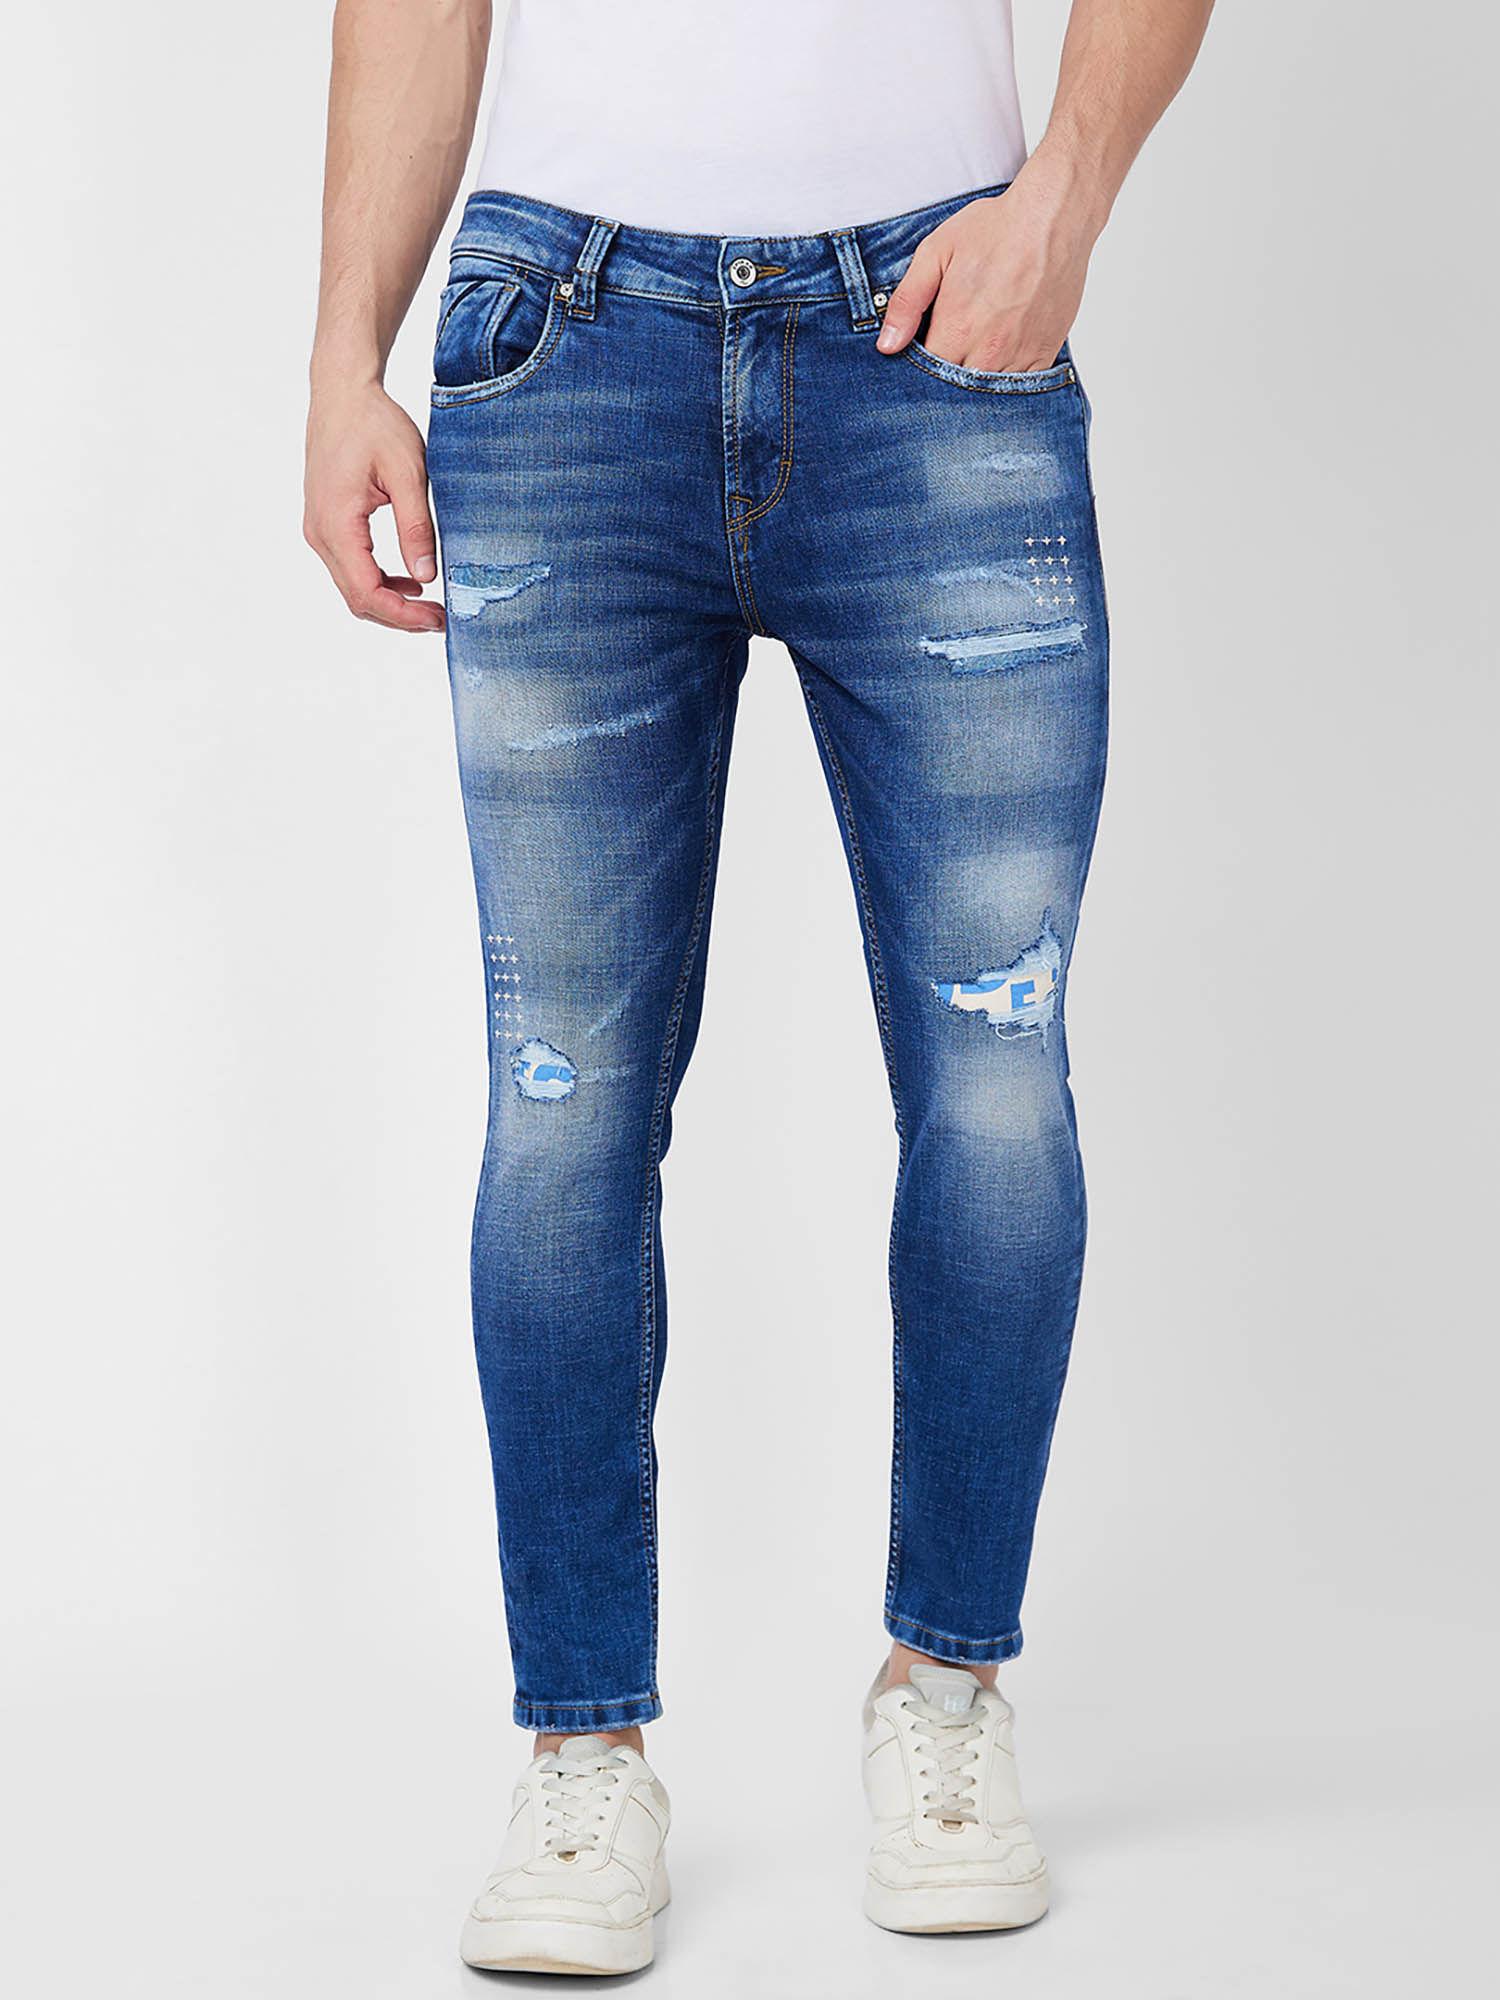 mid rise blue jeans for men